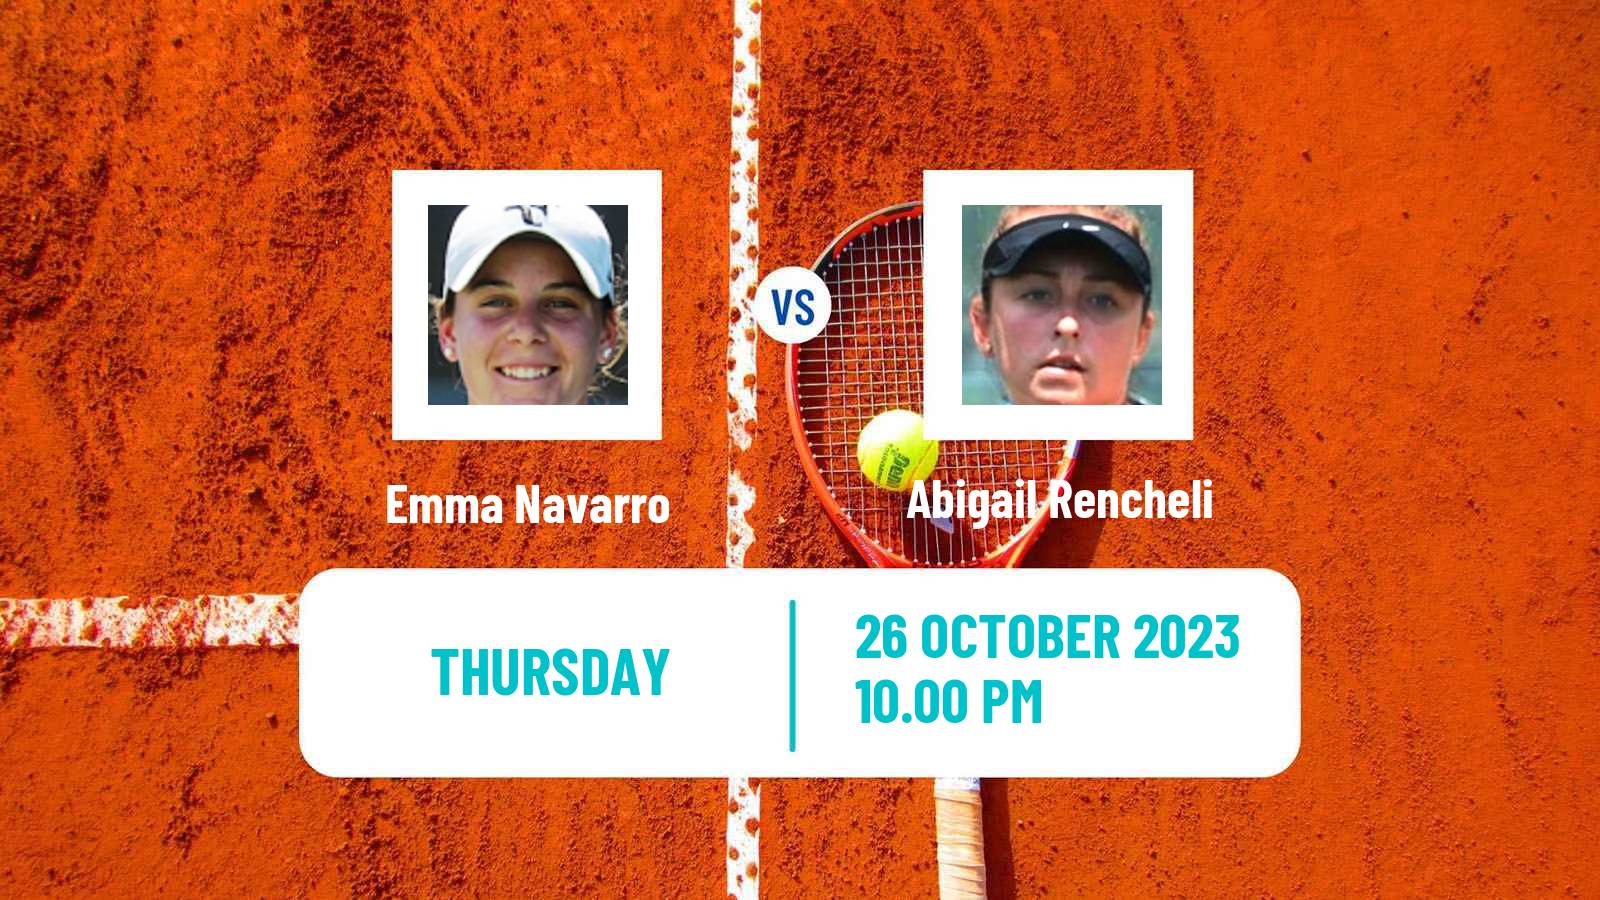 Tennis ITF W80 Tyler Tx Women Emma Navarro - Abigail Rencheli